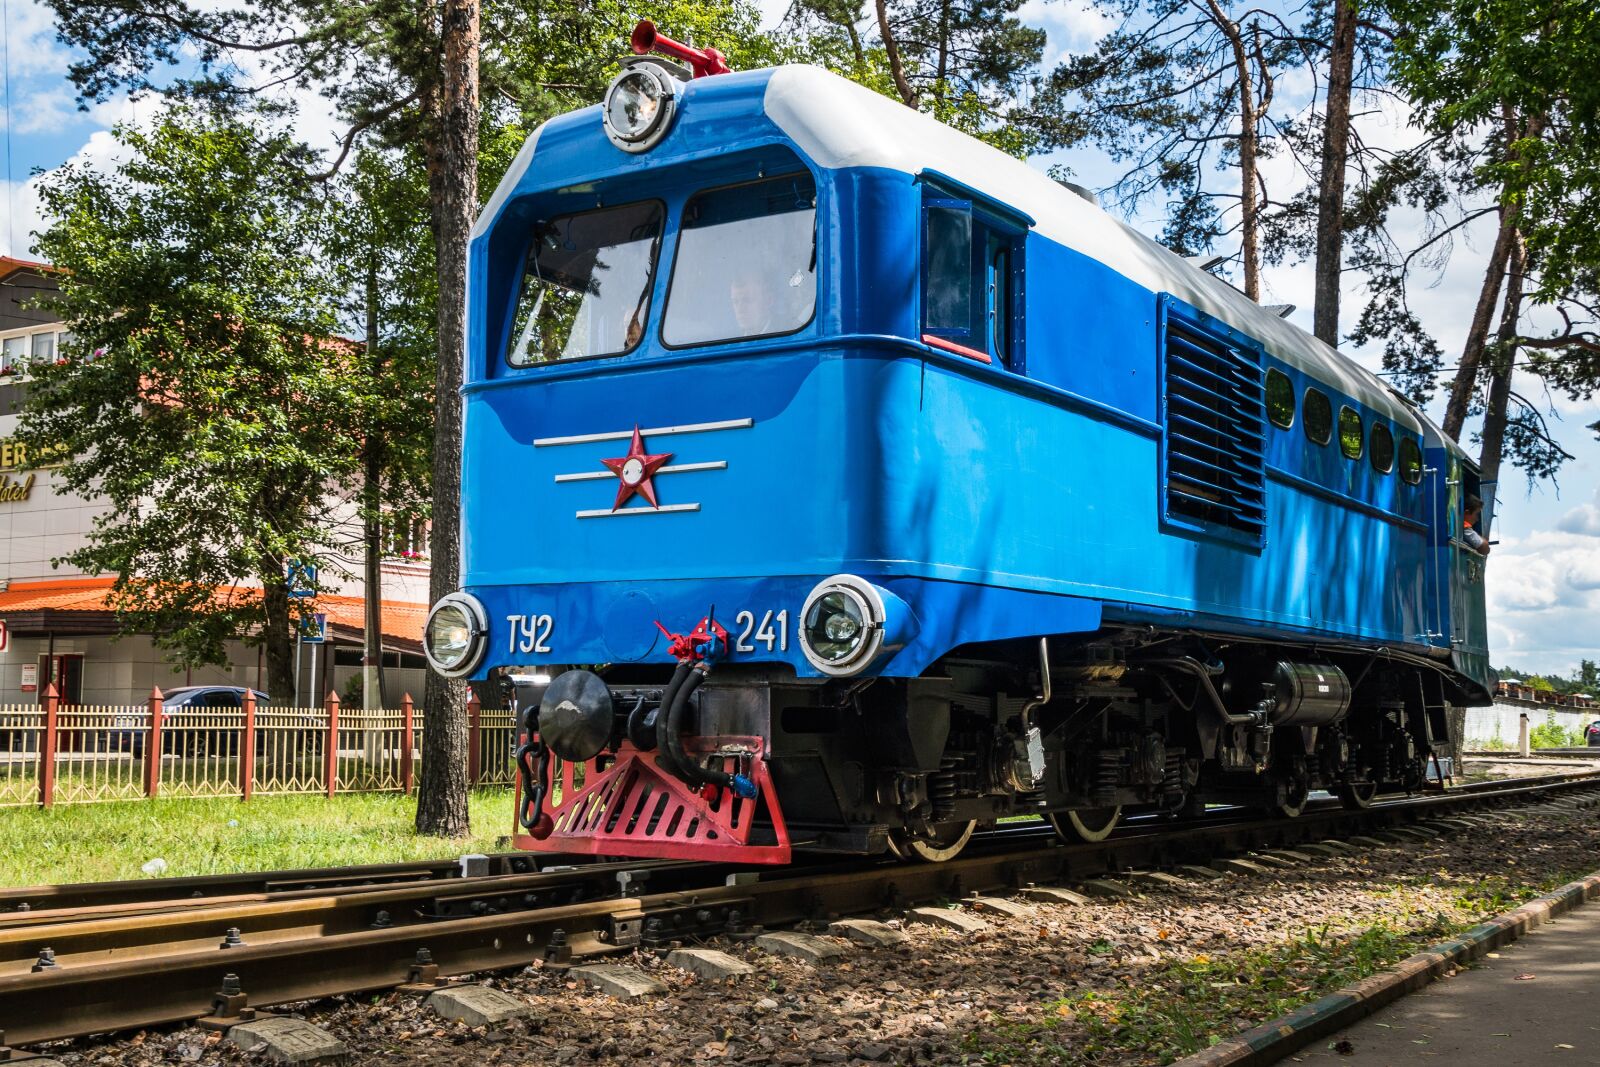 Sony a6300 sample photo. Locomotive, diesel locomotive, train photography